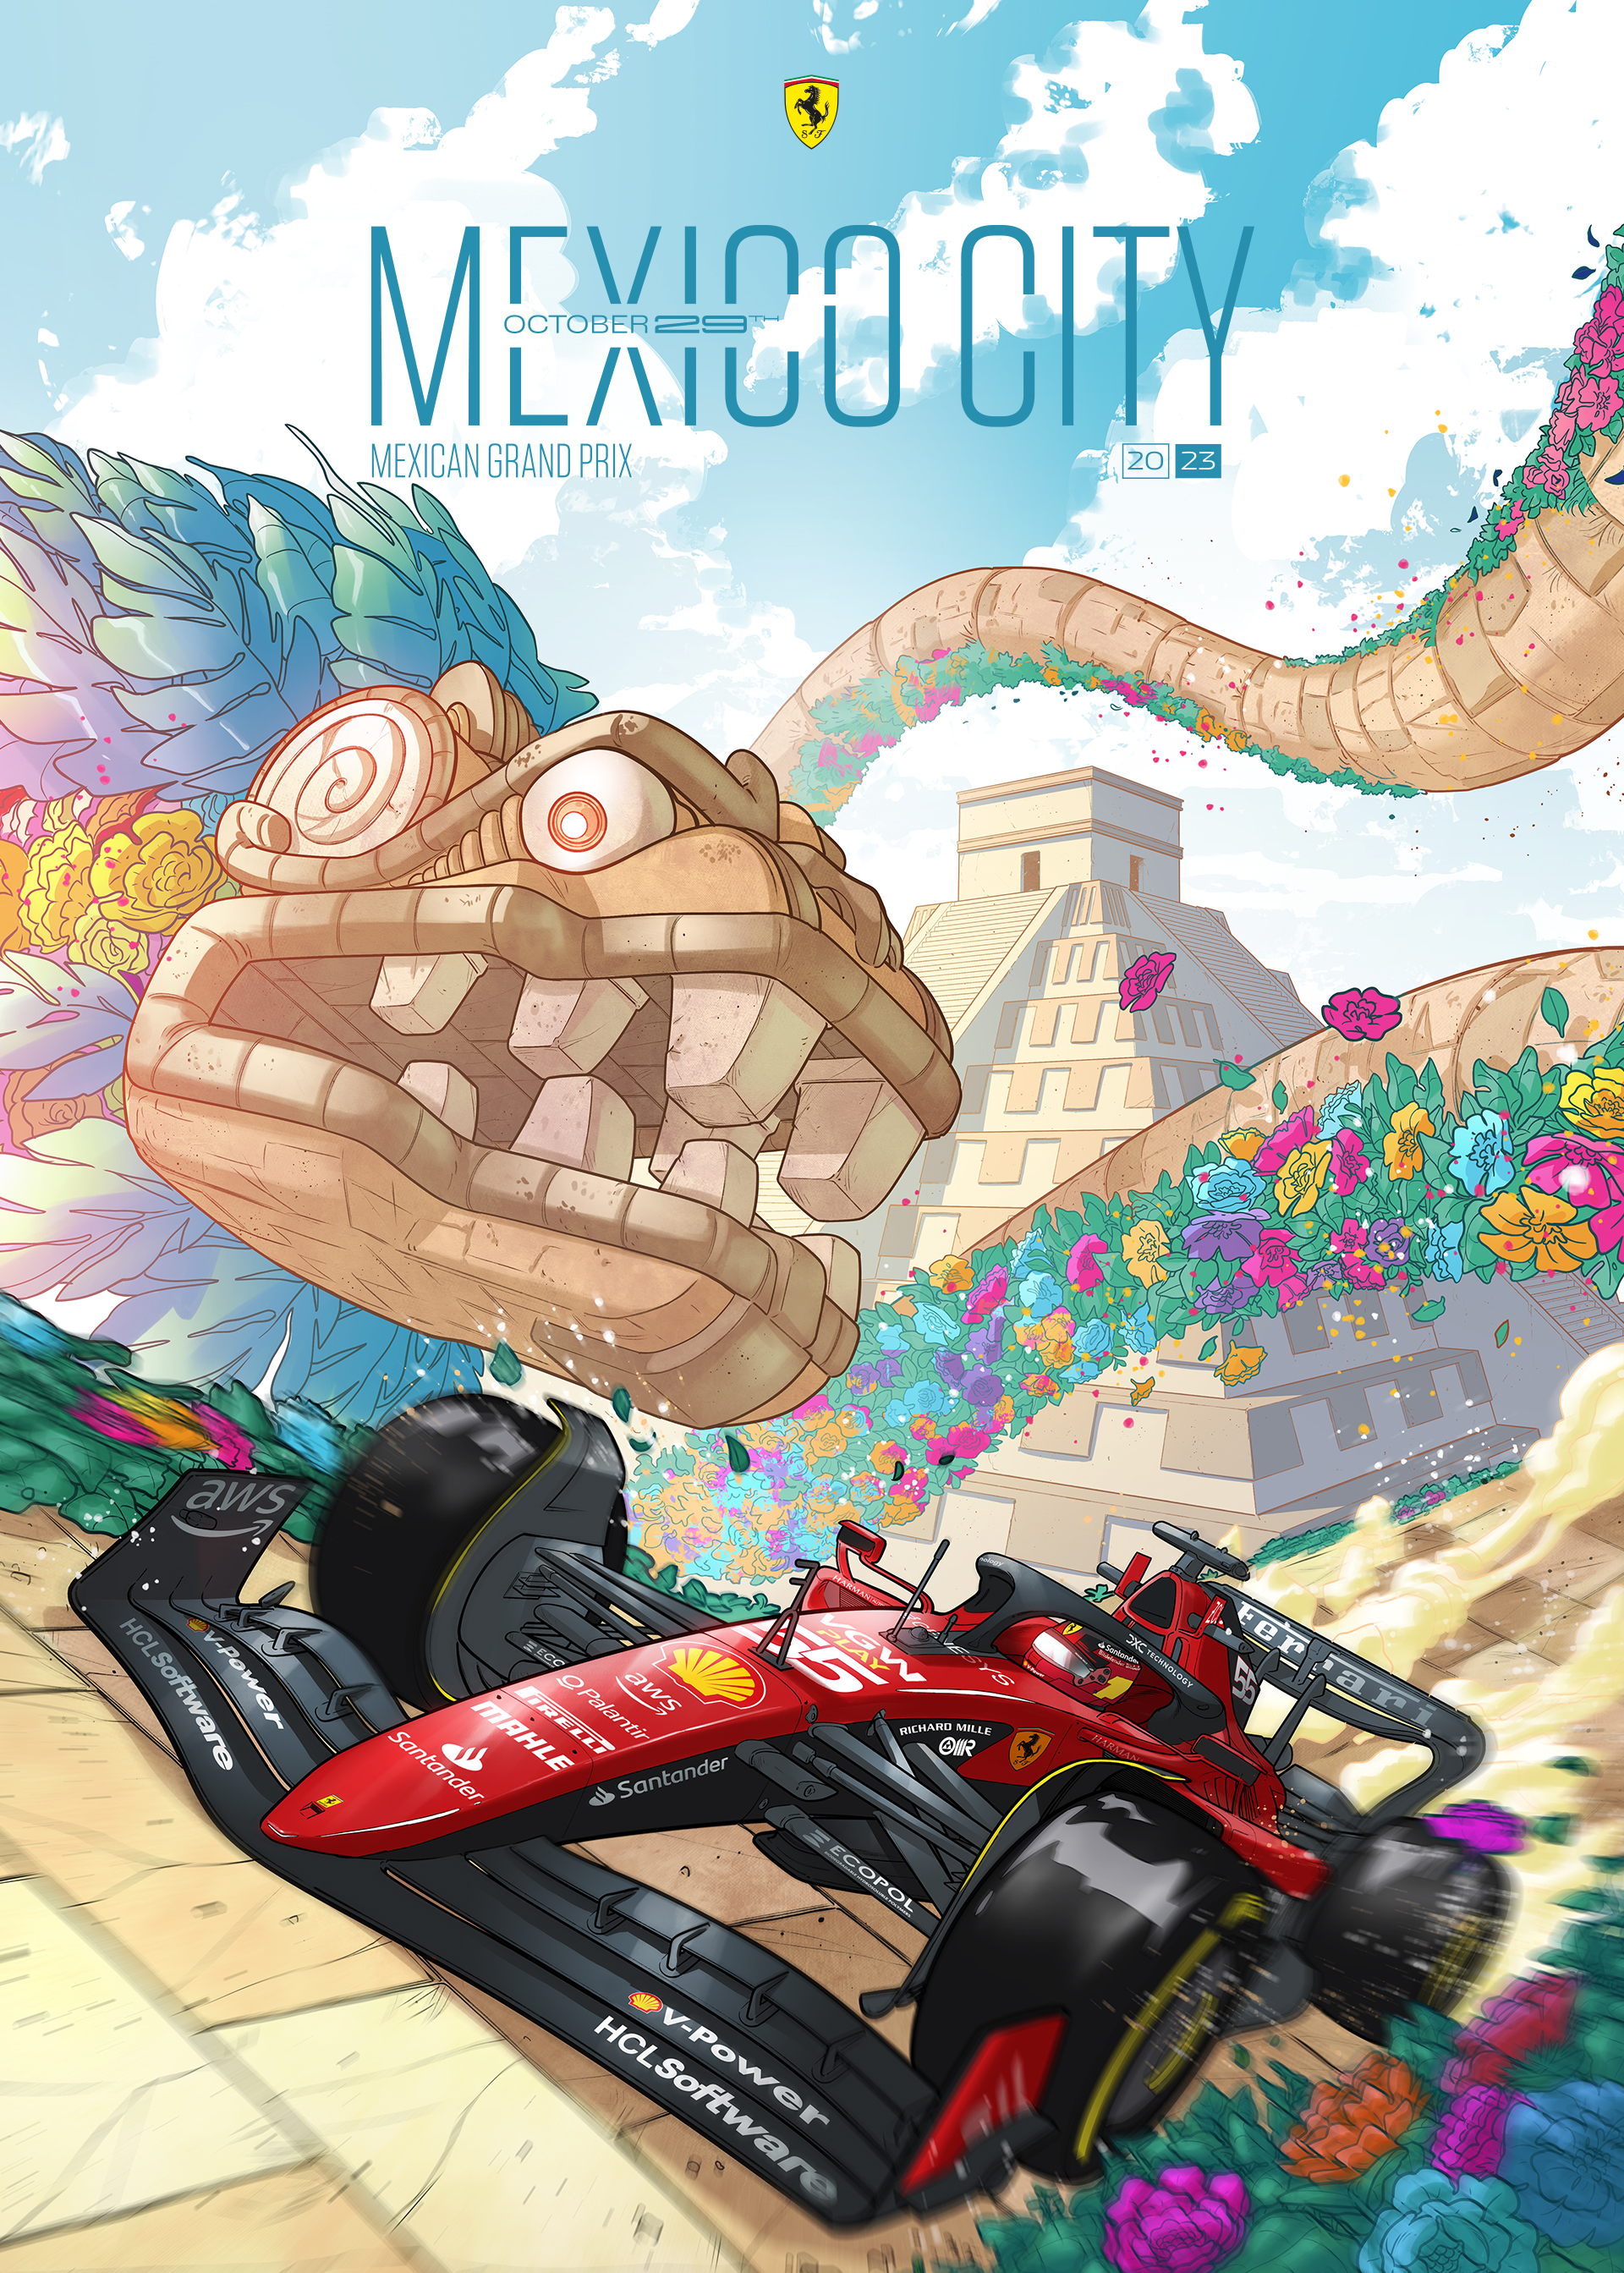 2023 Ferrari F1 RACE 20 Mexico grand prix race cover art poster